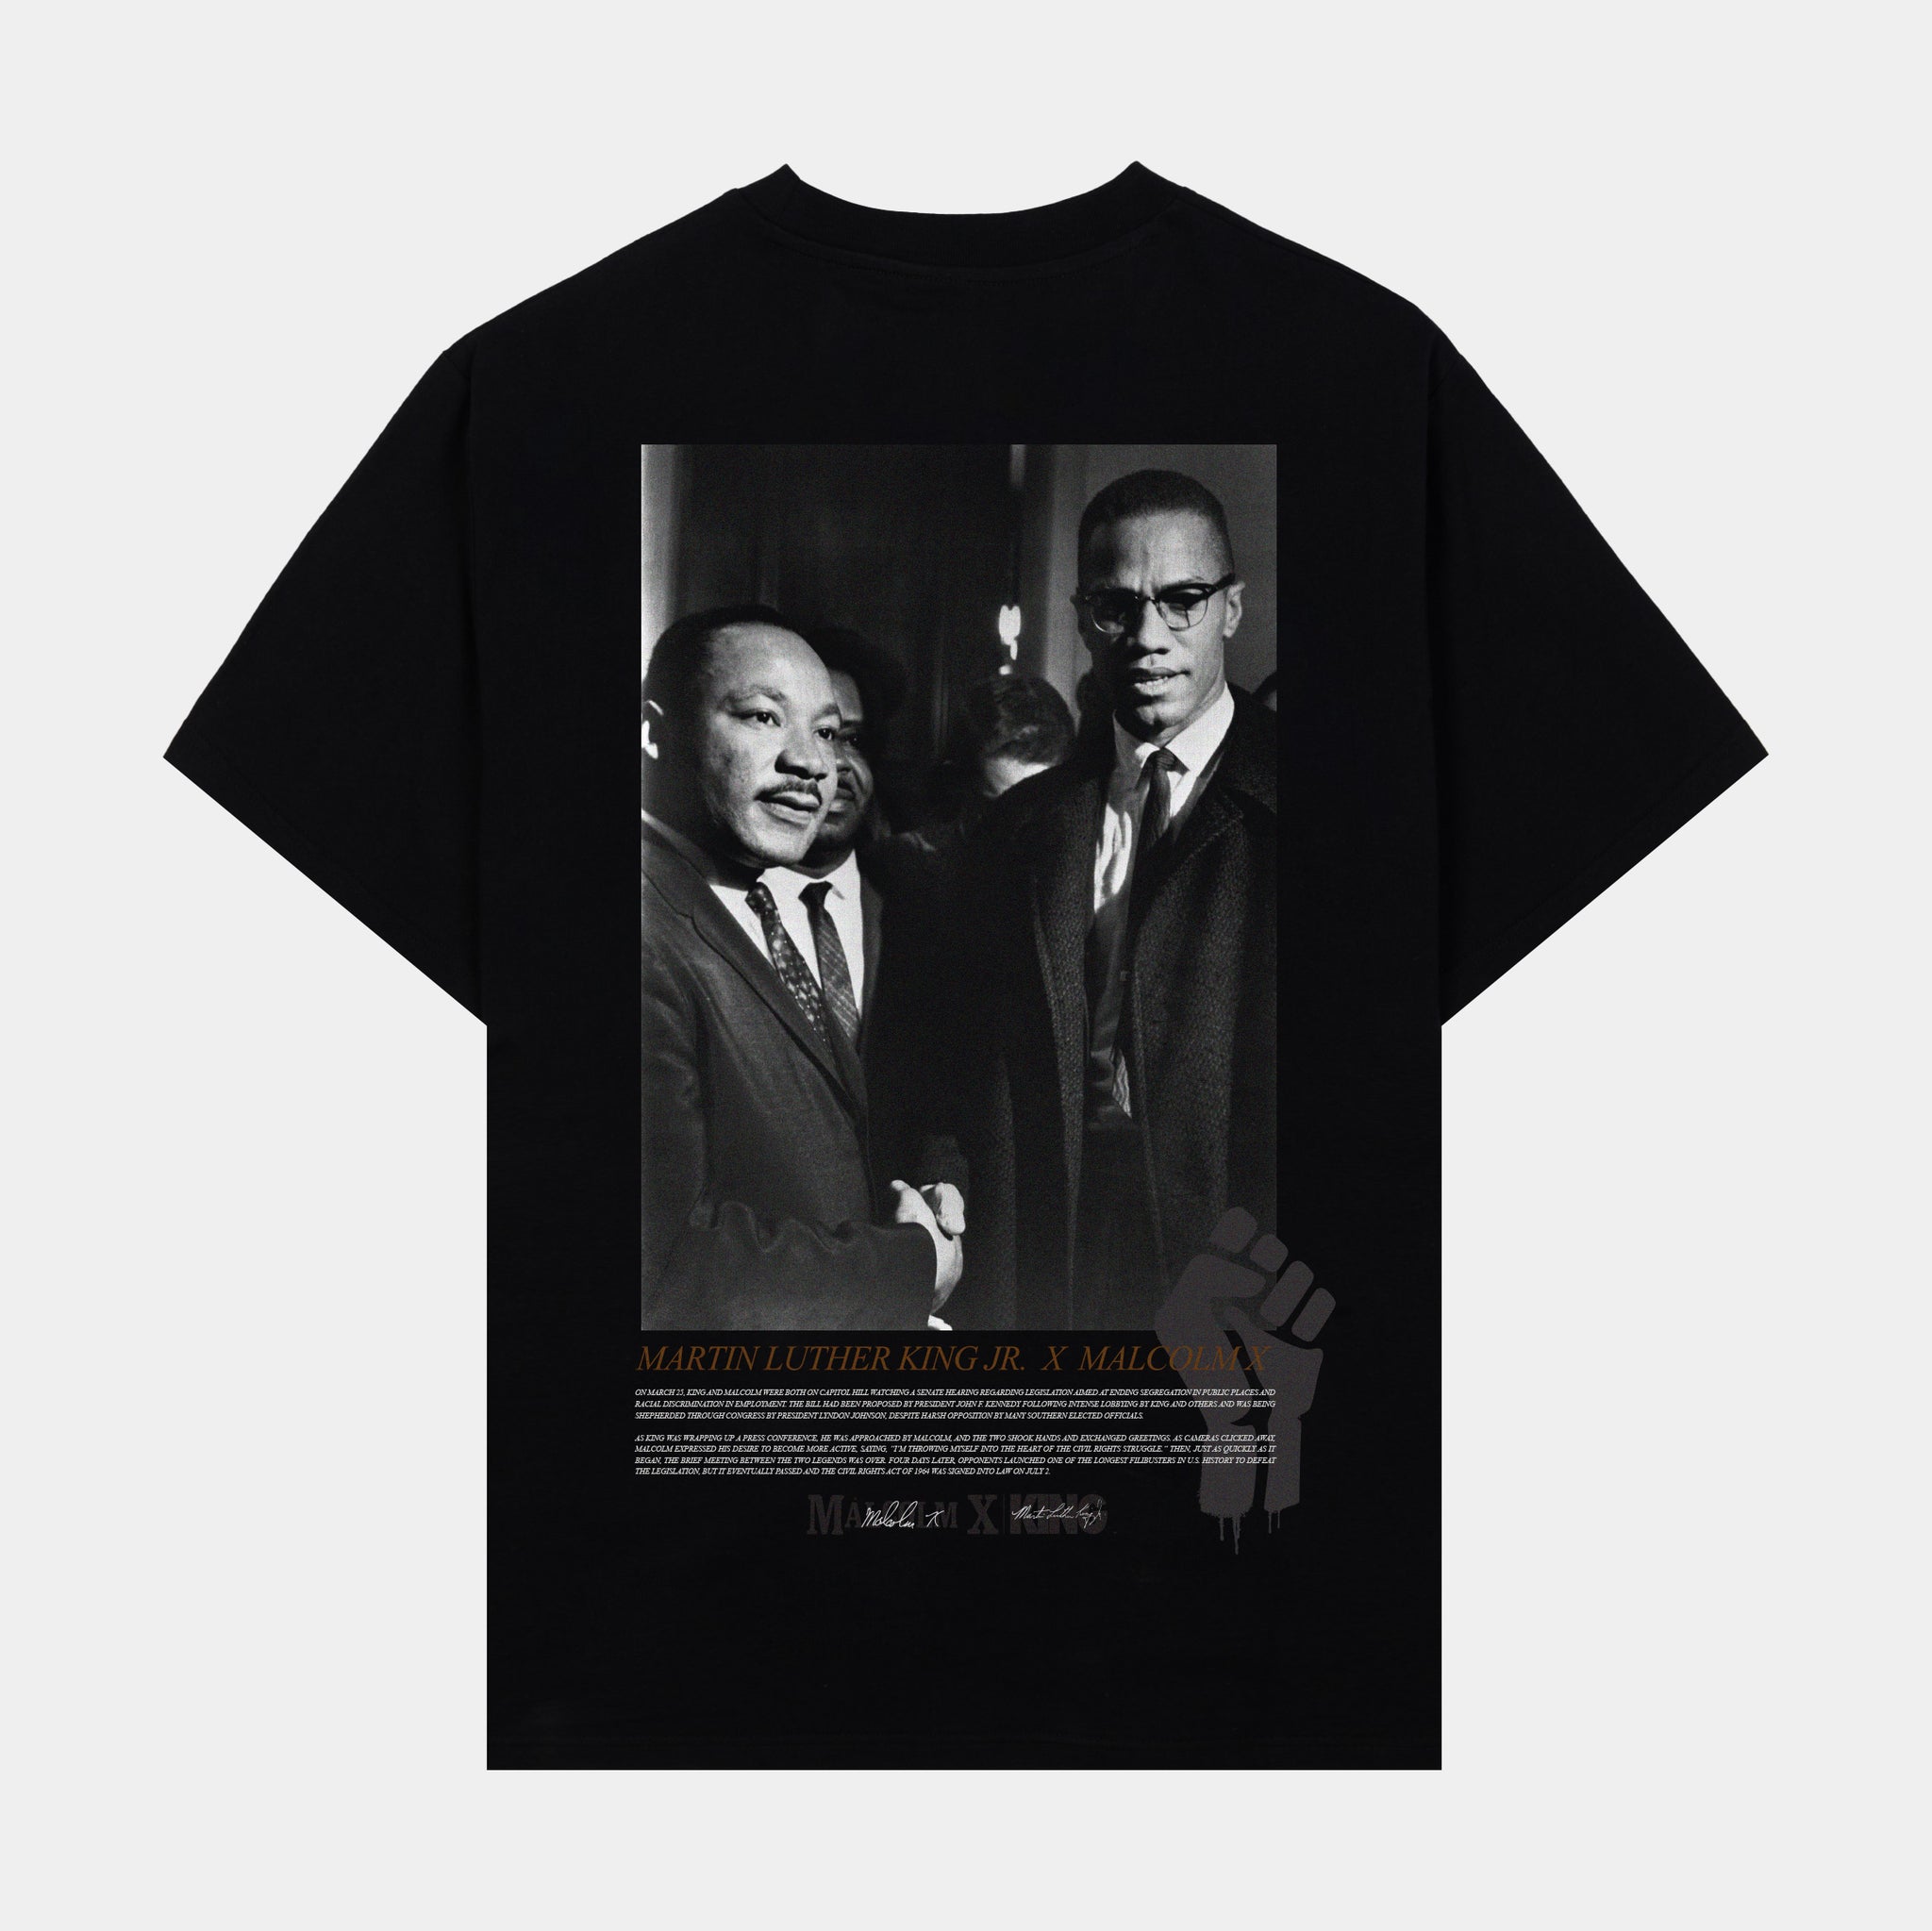 SP x Malcom X u0026 MLK Leaders Mens Short Sleeve Shirt (Black/White)